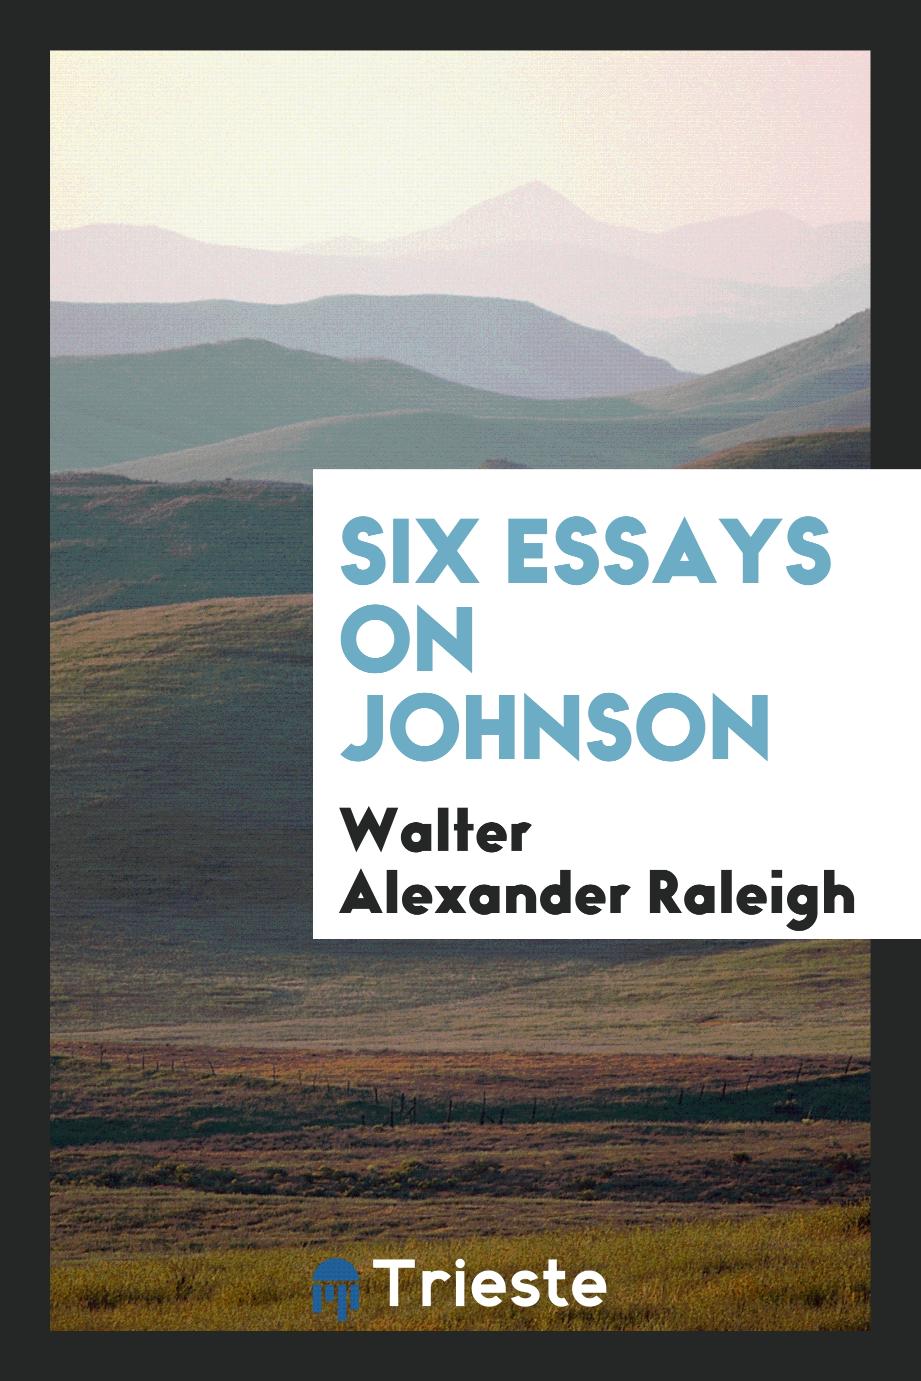 Six essays on Johnson